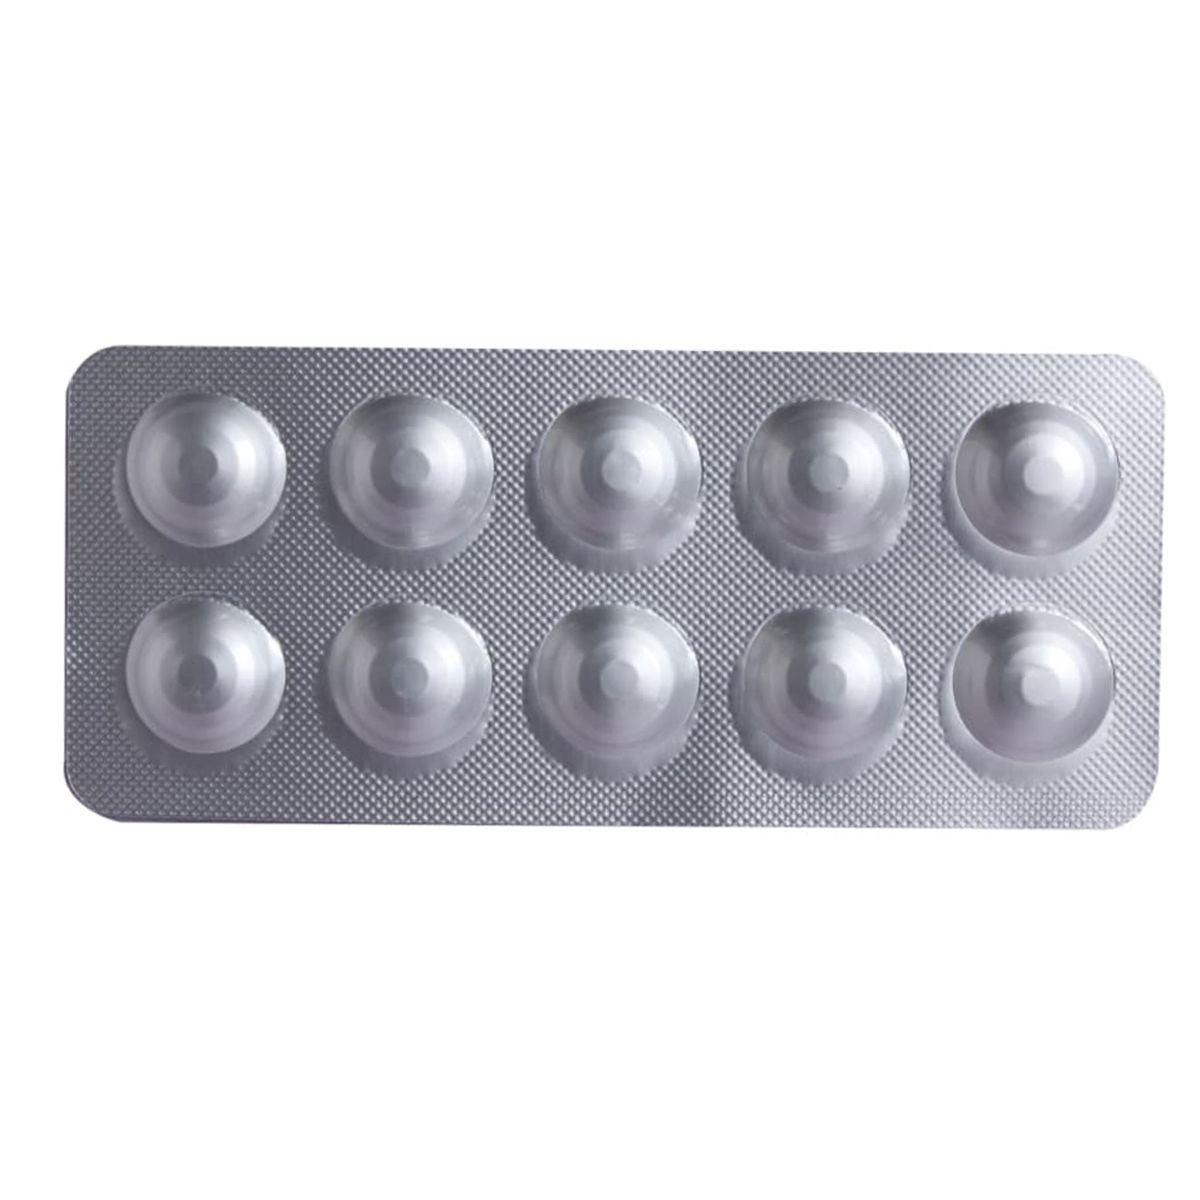 Buy Tofashine 5 mg Tablet 10's Online